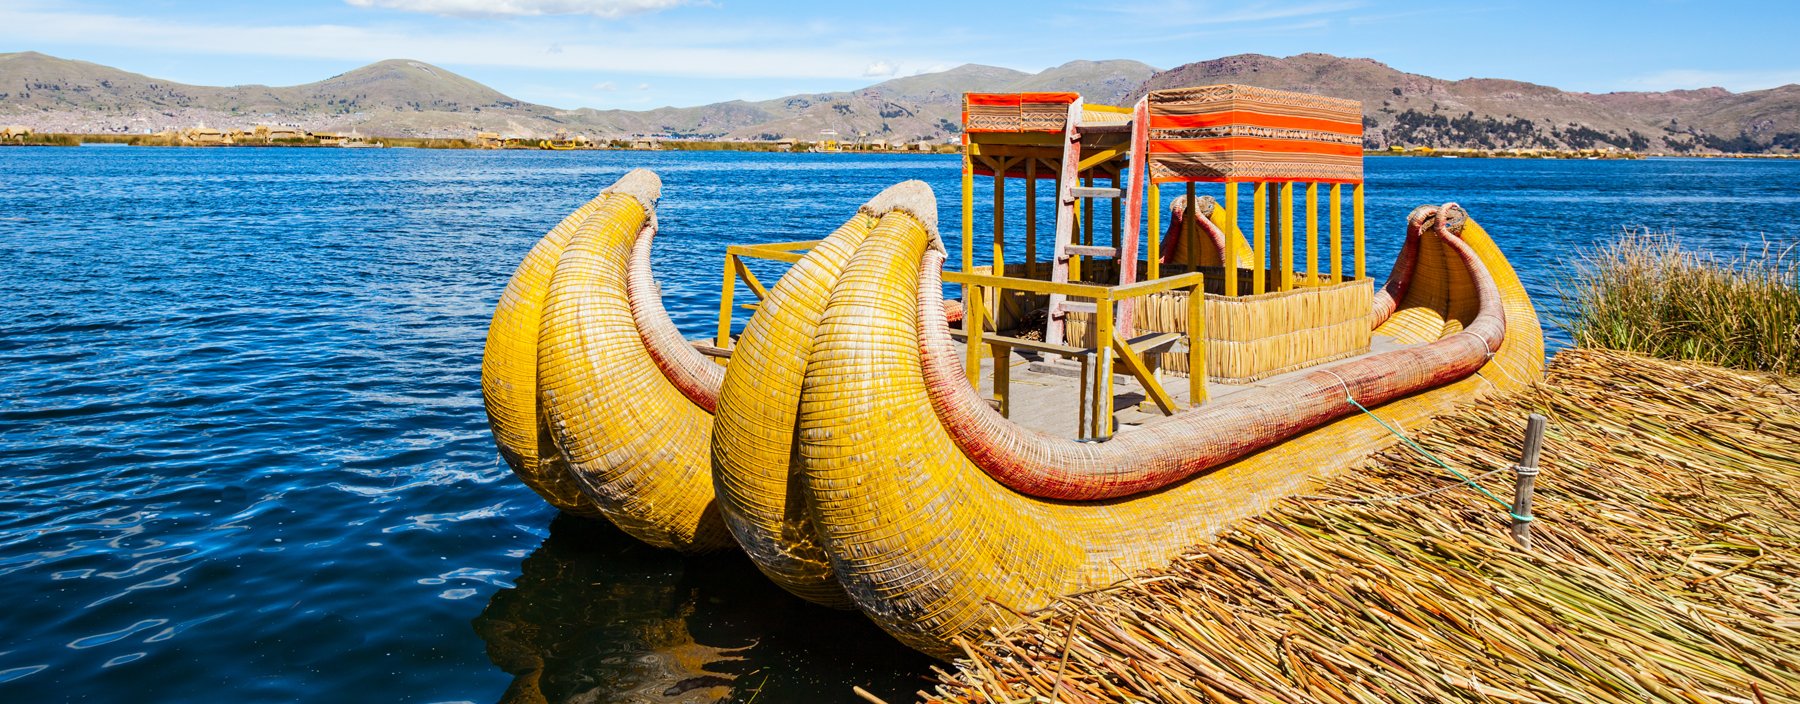 pe, titicaca lake, uros islands (3.jpg